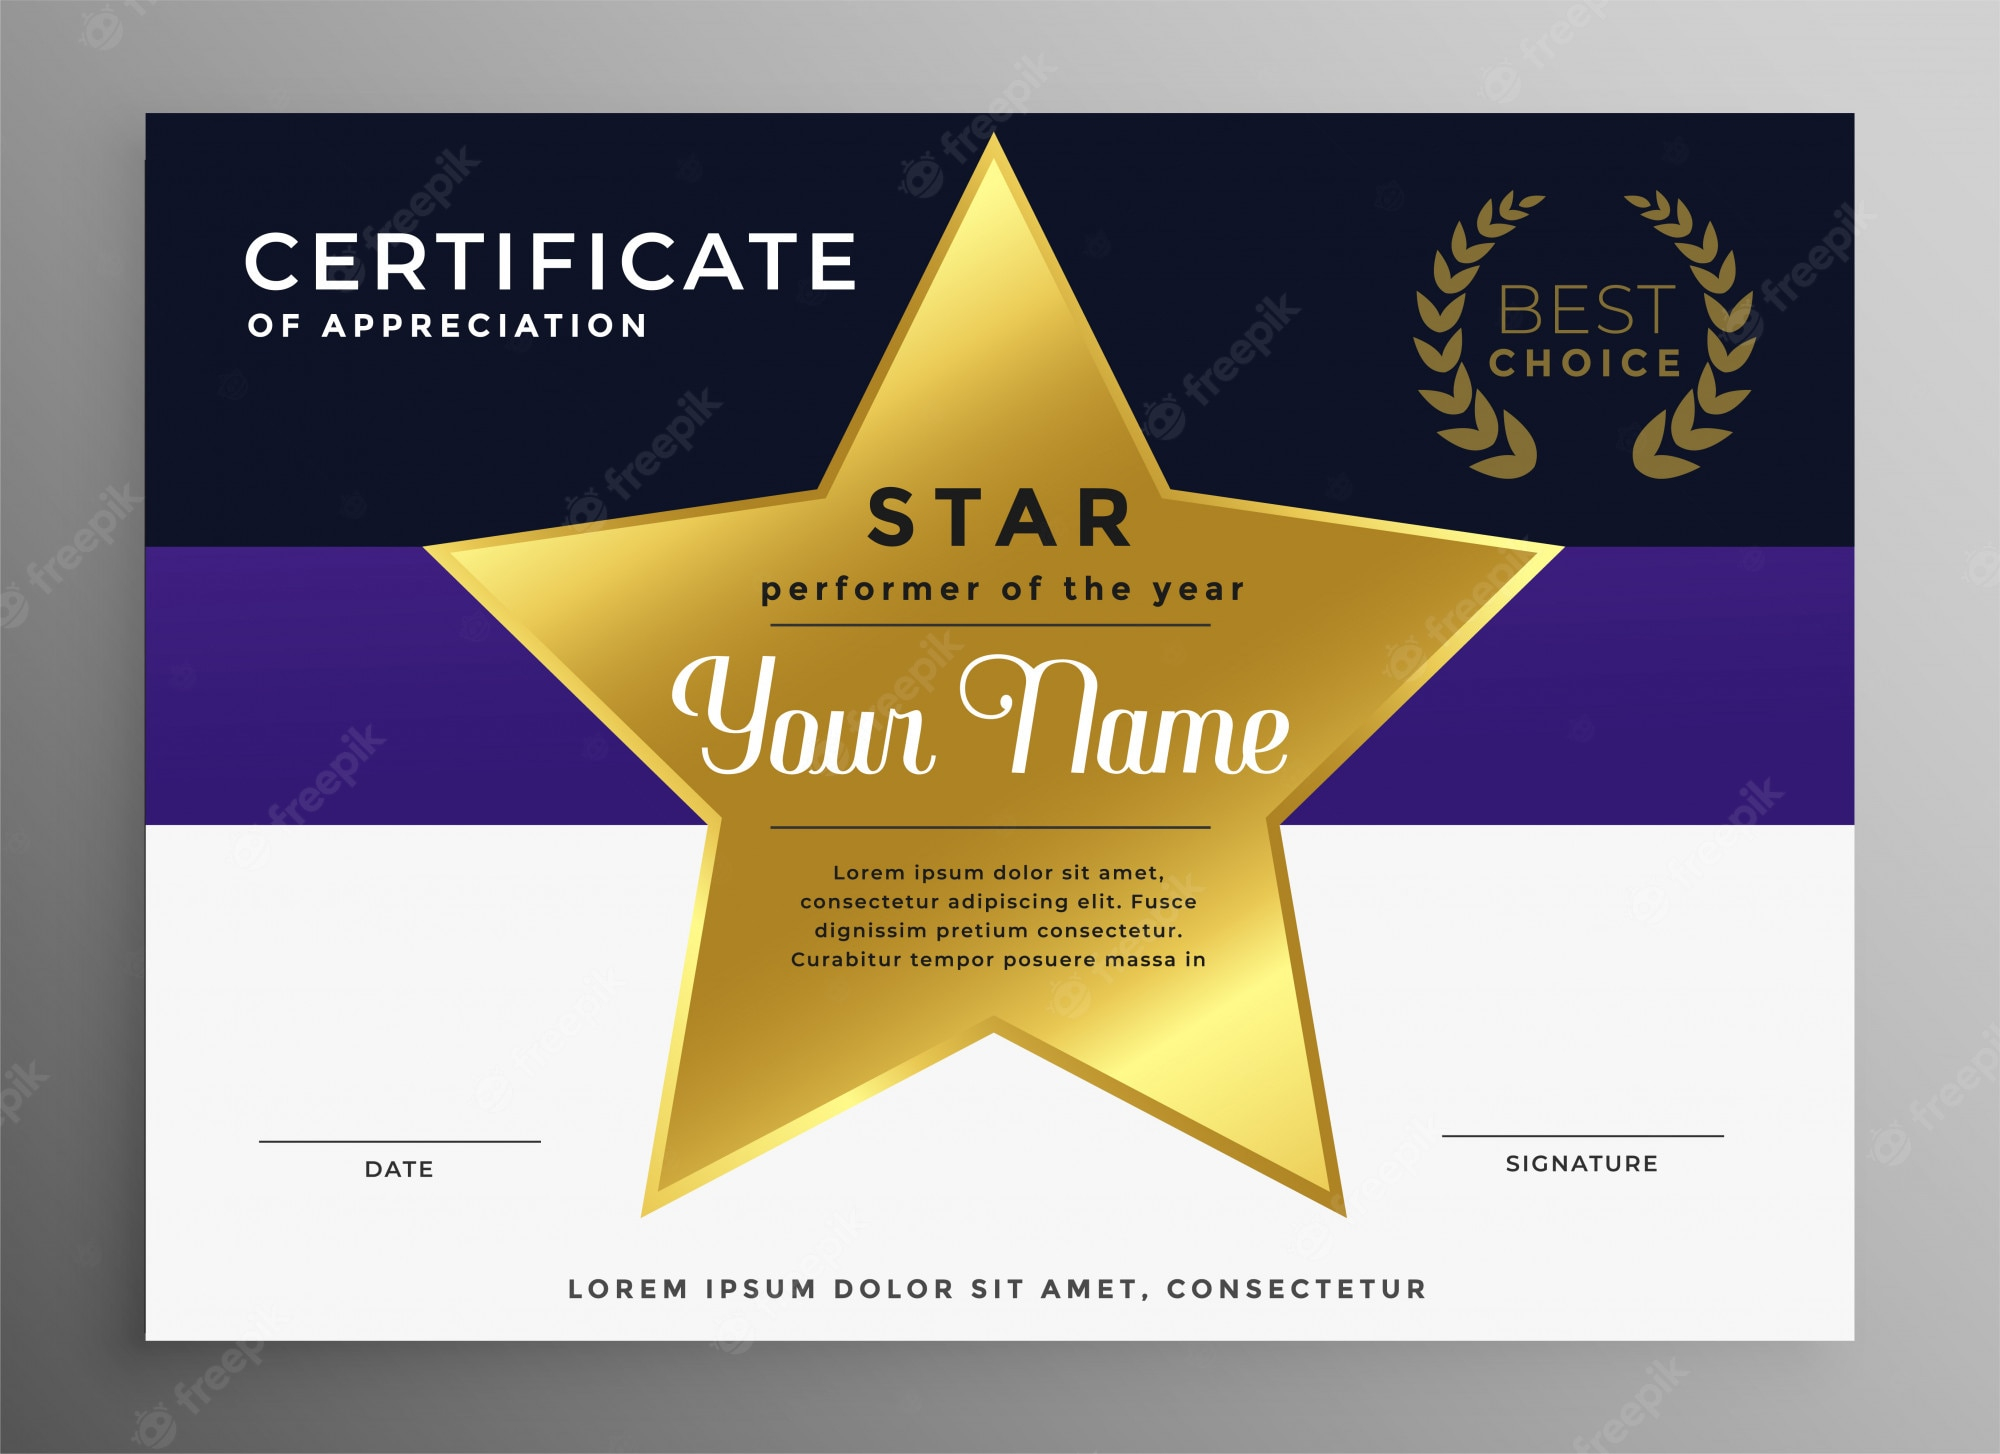 Free Vector  Certificate of appreciation template with golden star For Star Certificate Templates Free